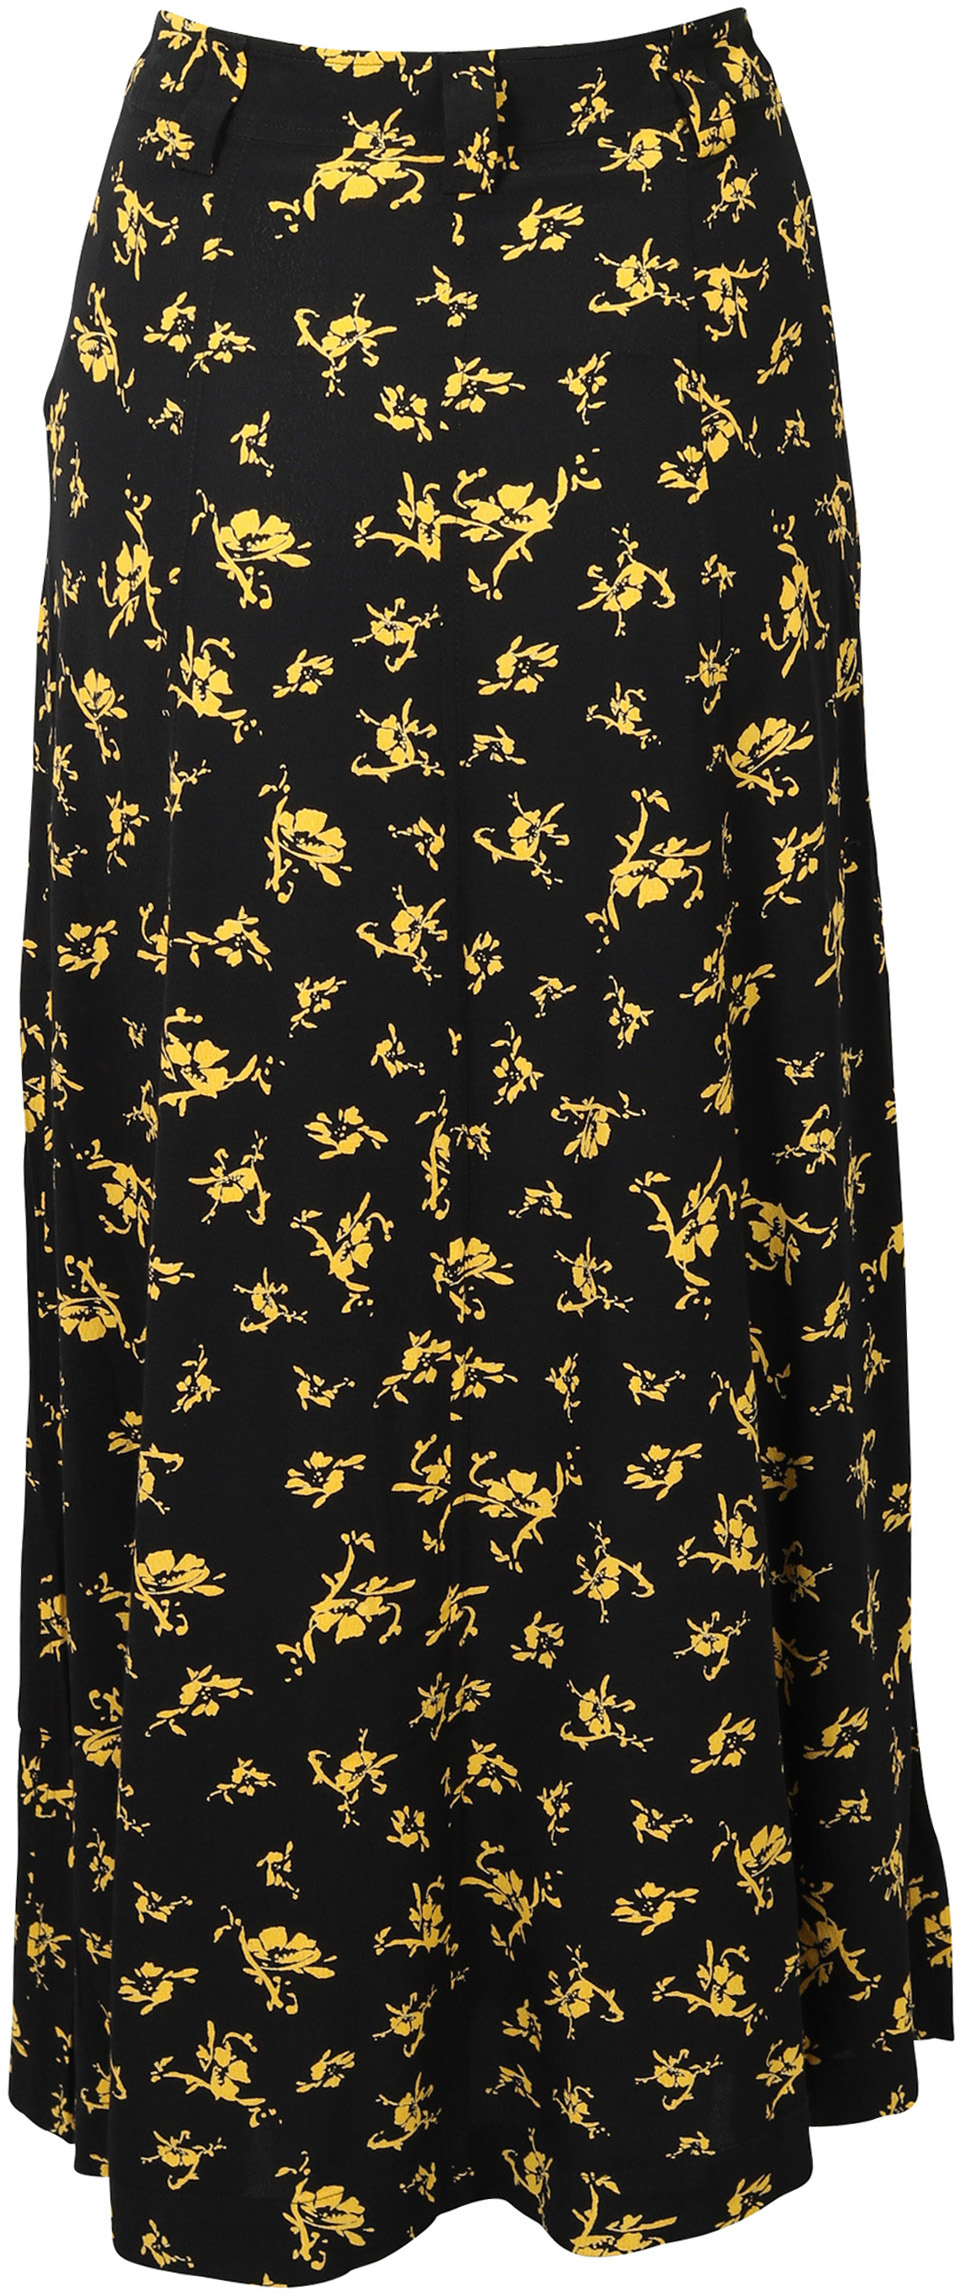 Ganni Printed Skirt Black/Yellow